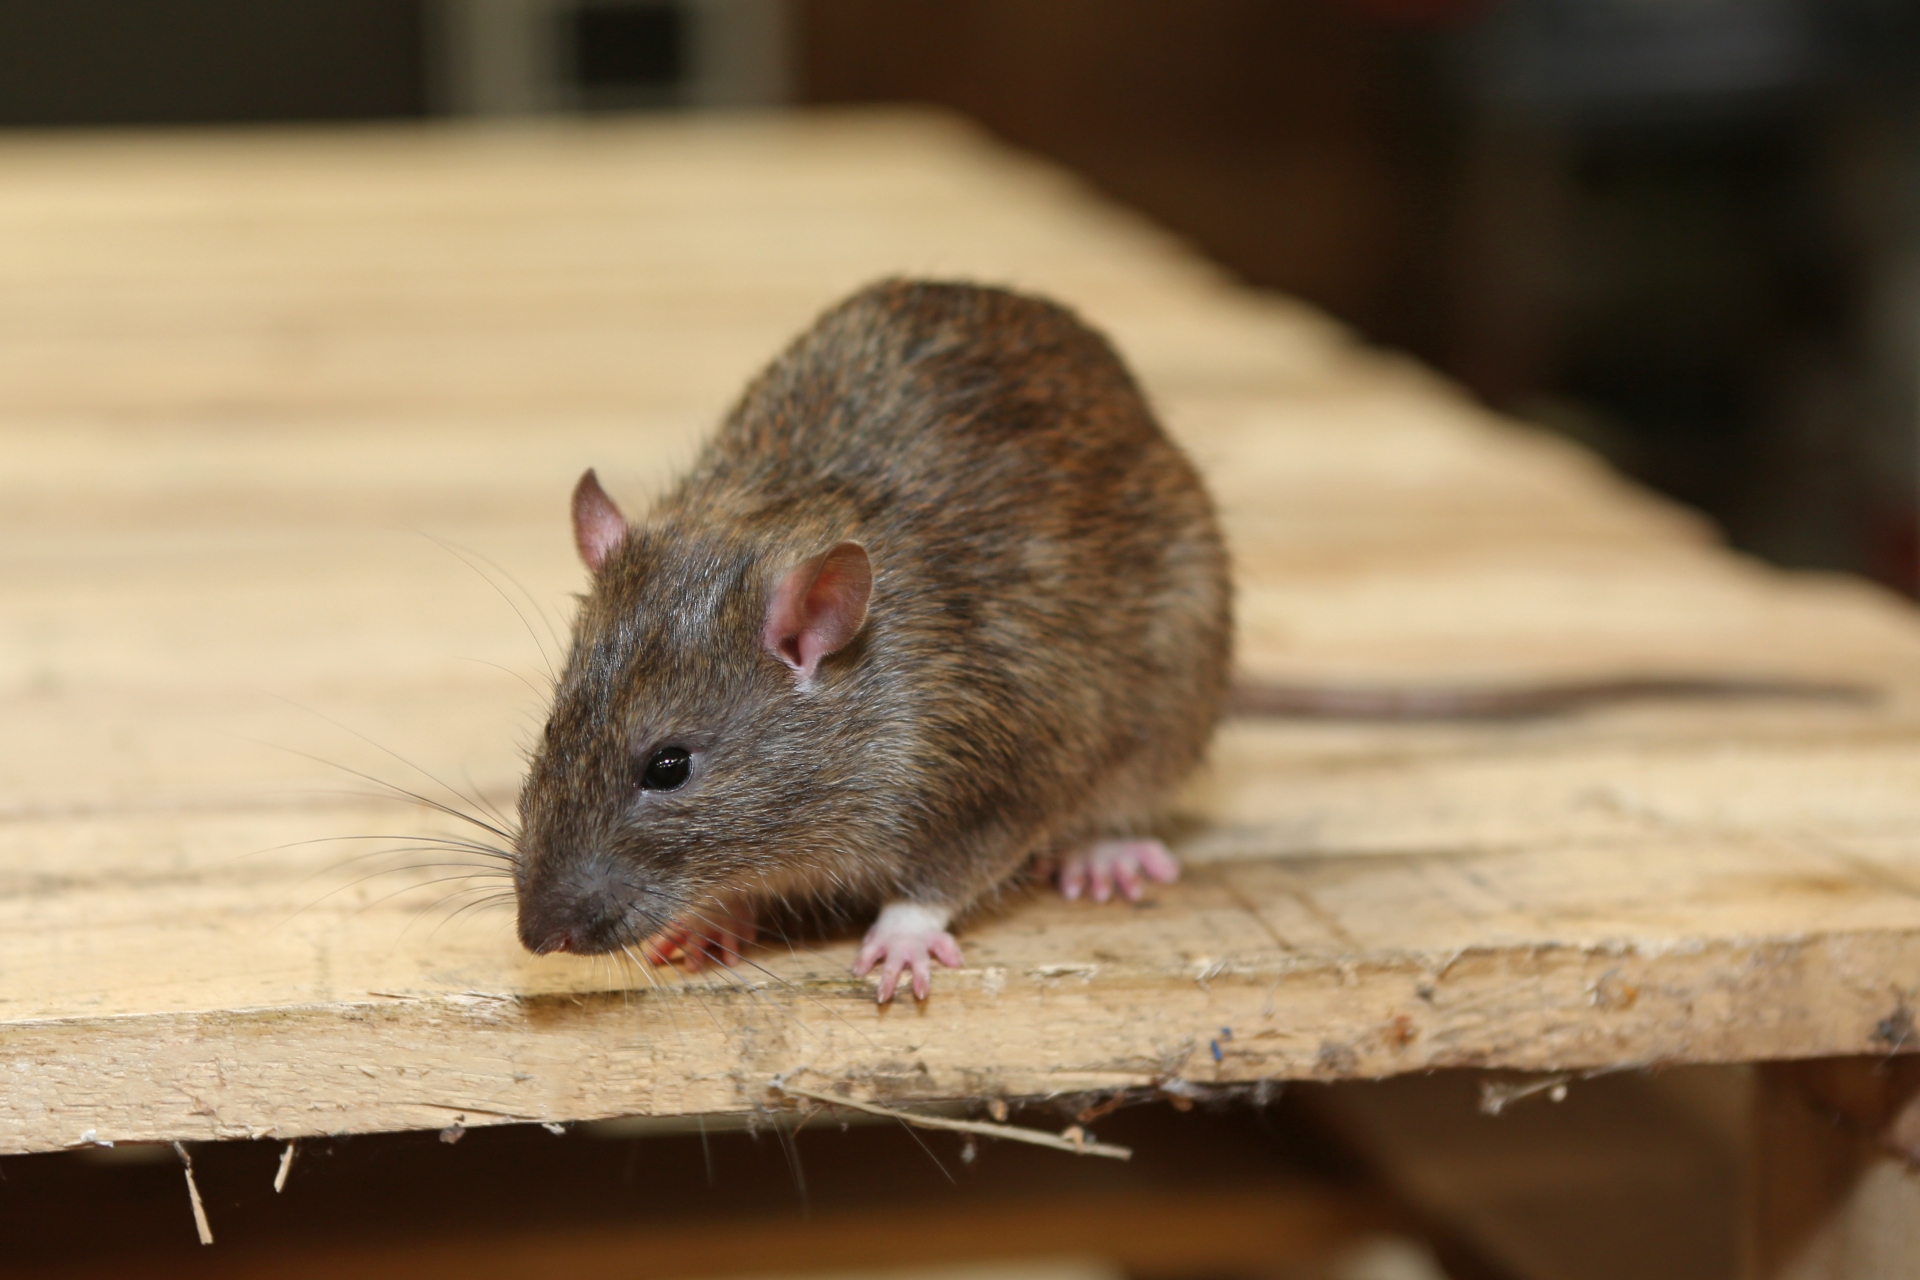 Rat extermination, Pest Control in Enfield, EN1. Call Now 020 8166 9746